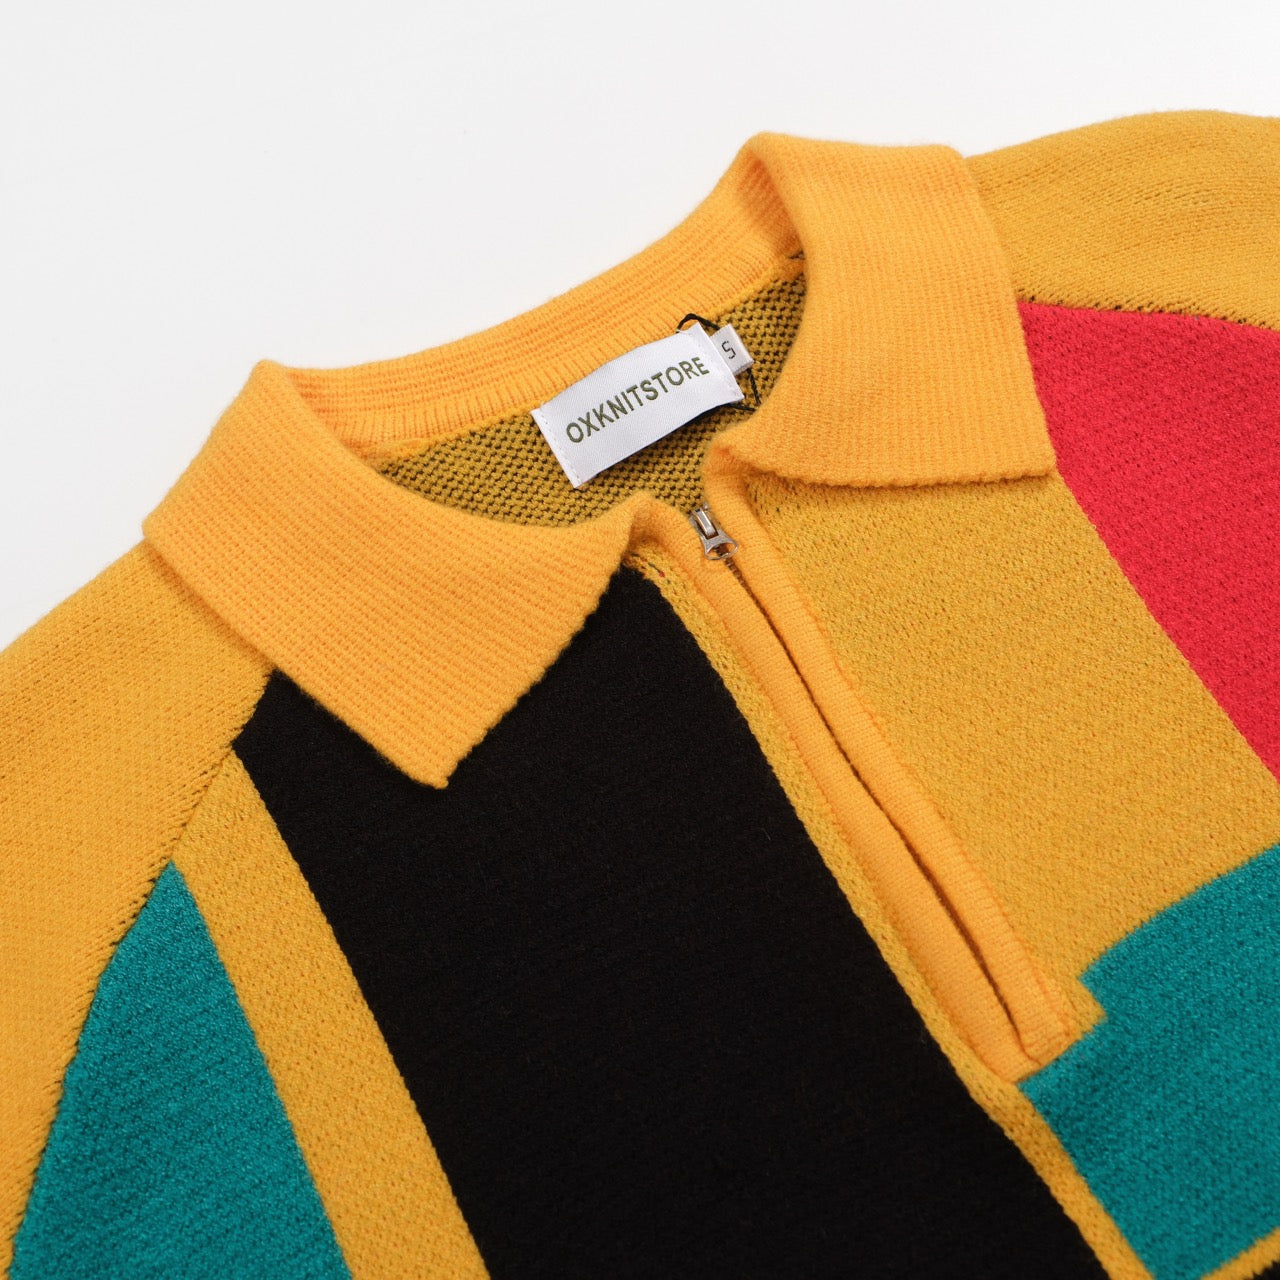 Men's multi-colored striped knit polo shirt